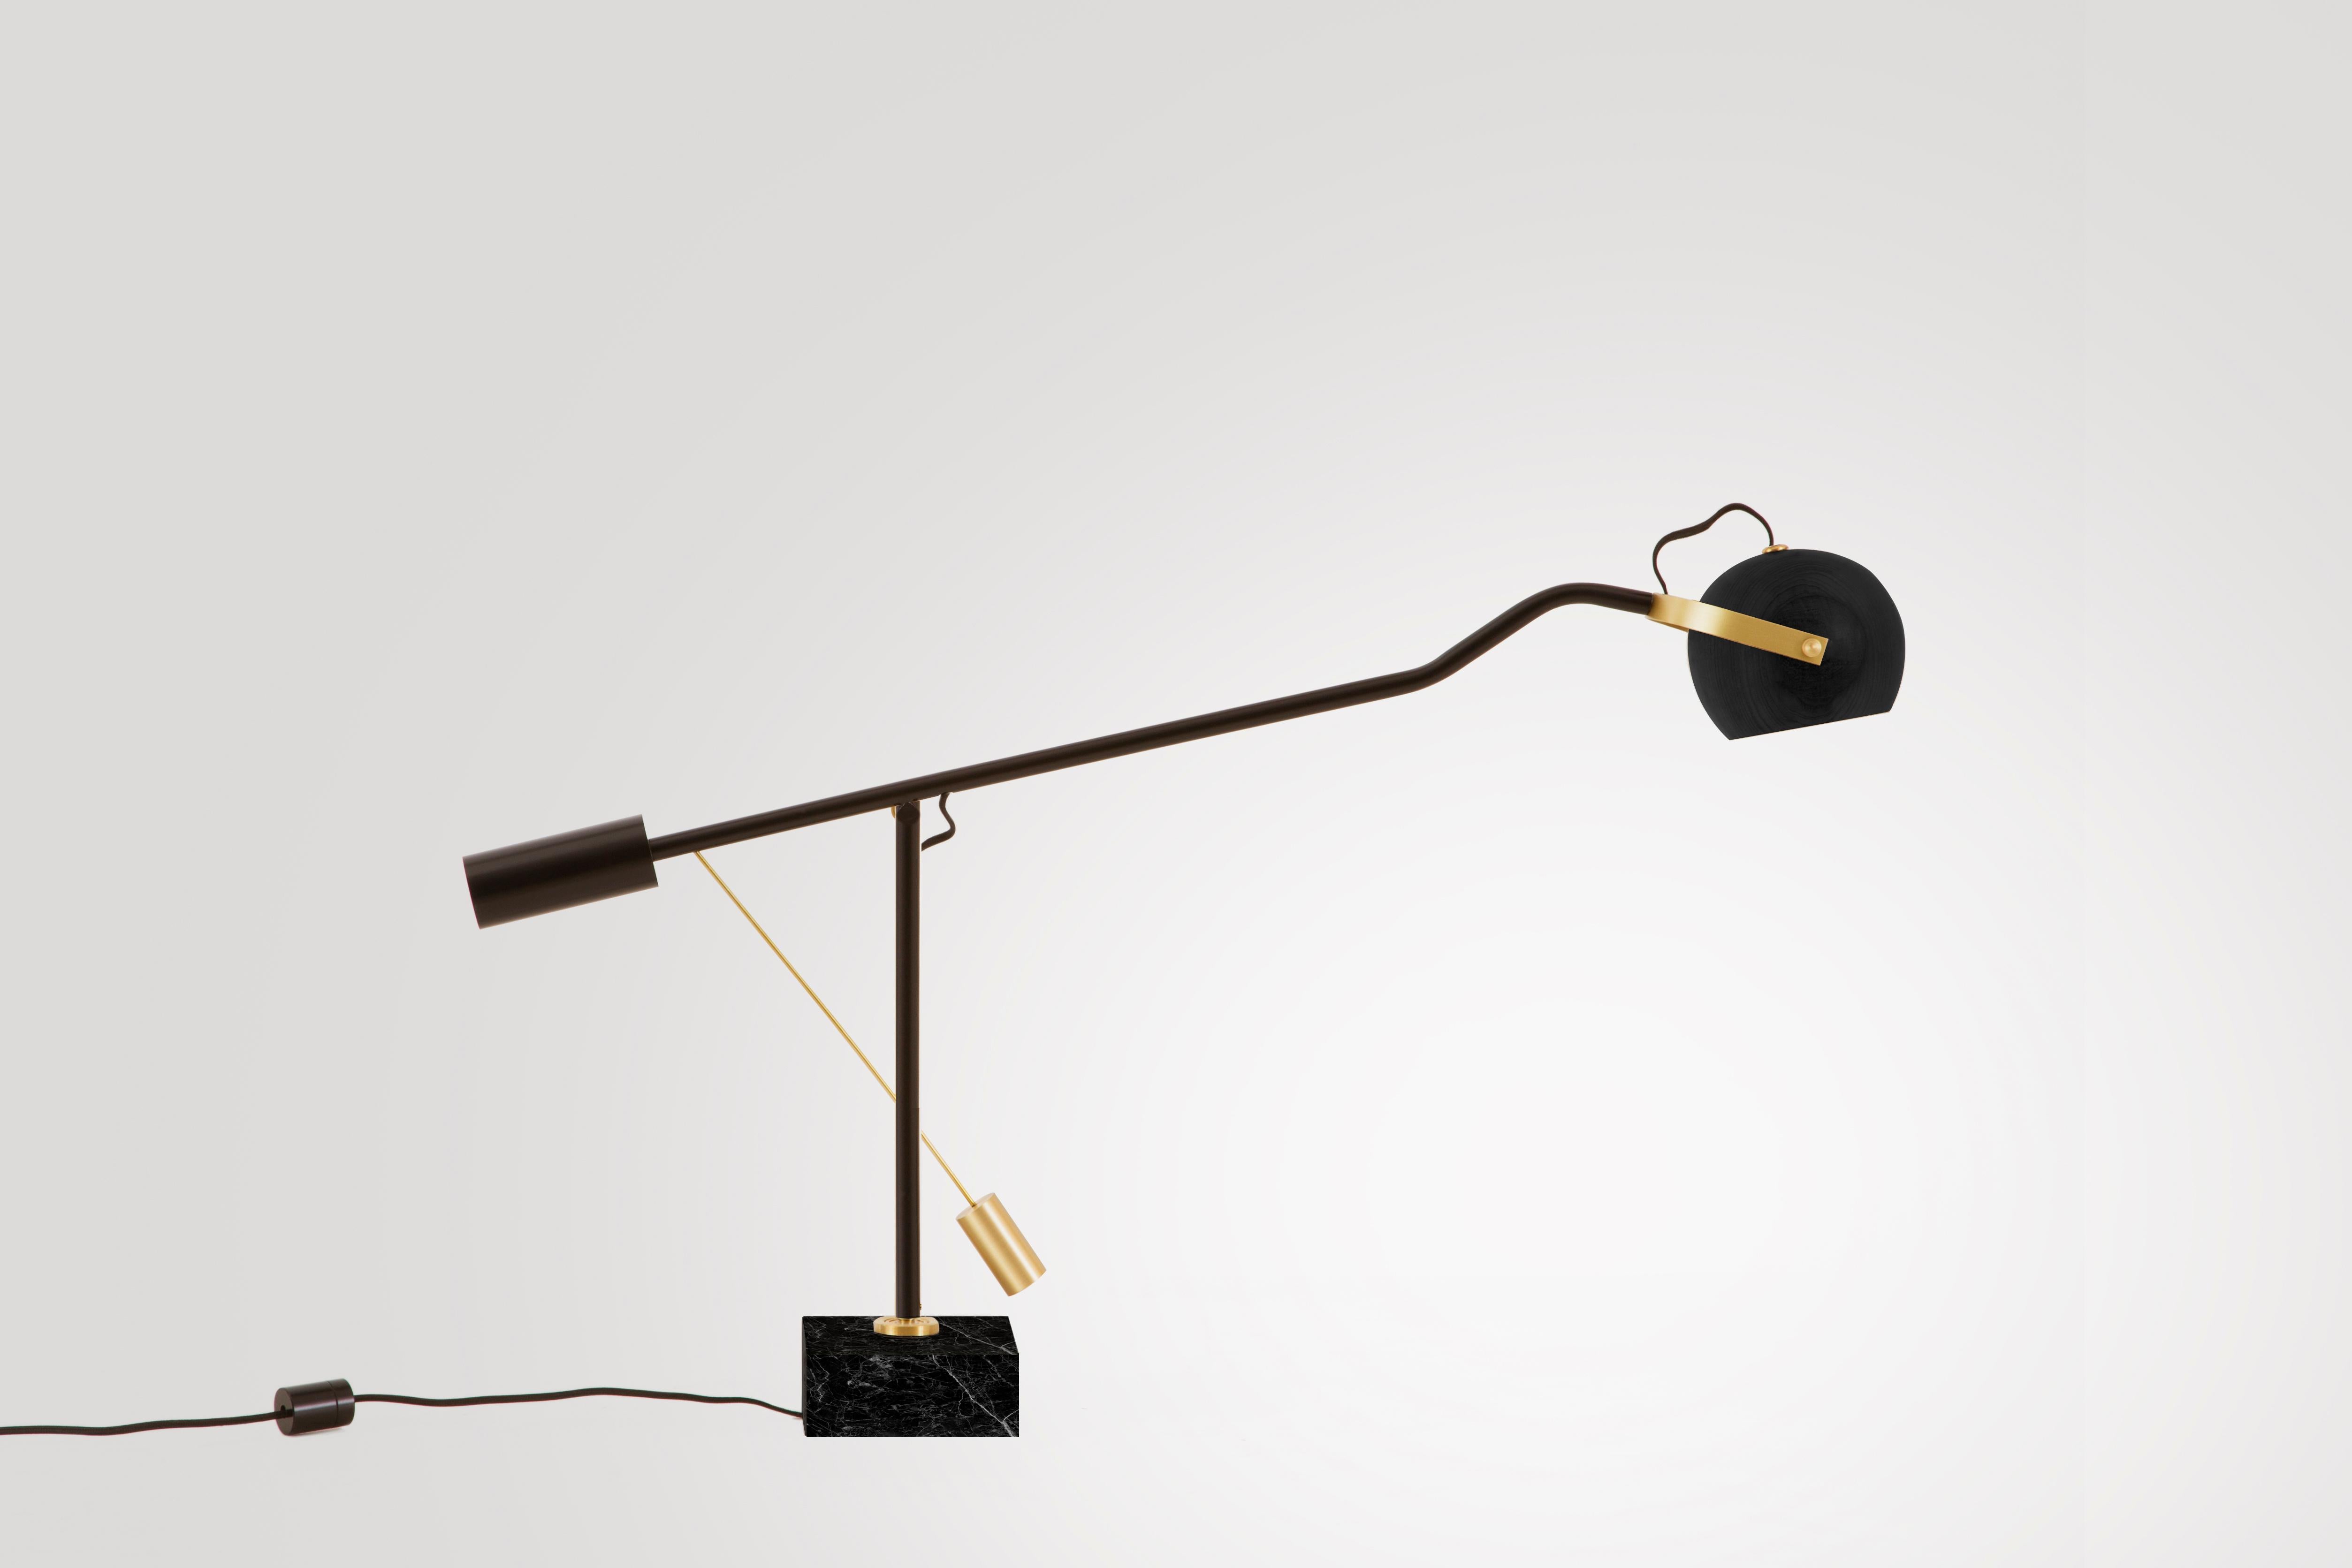 Brazilian Wood, Adjustable Desk Lamp, brass details, Mid Century Modern Style For Sale 7